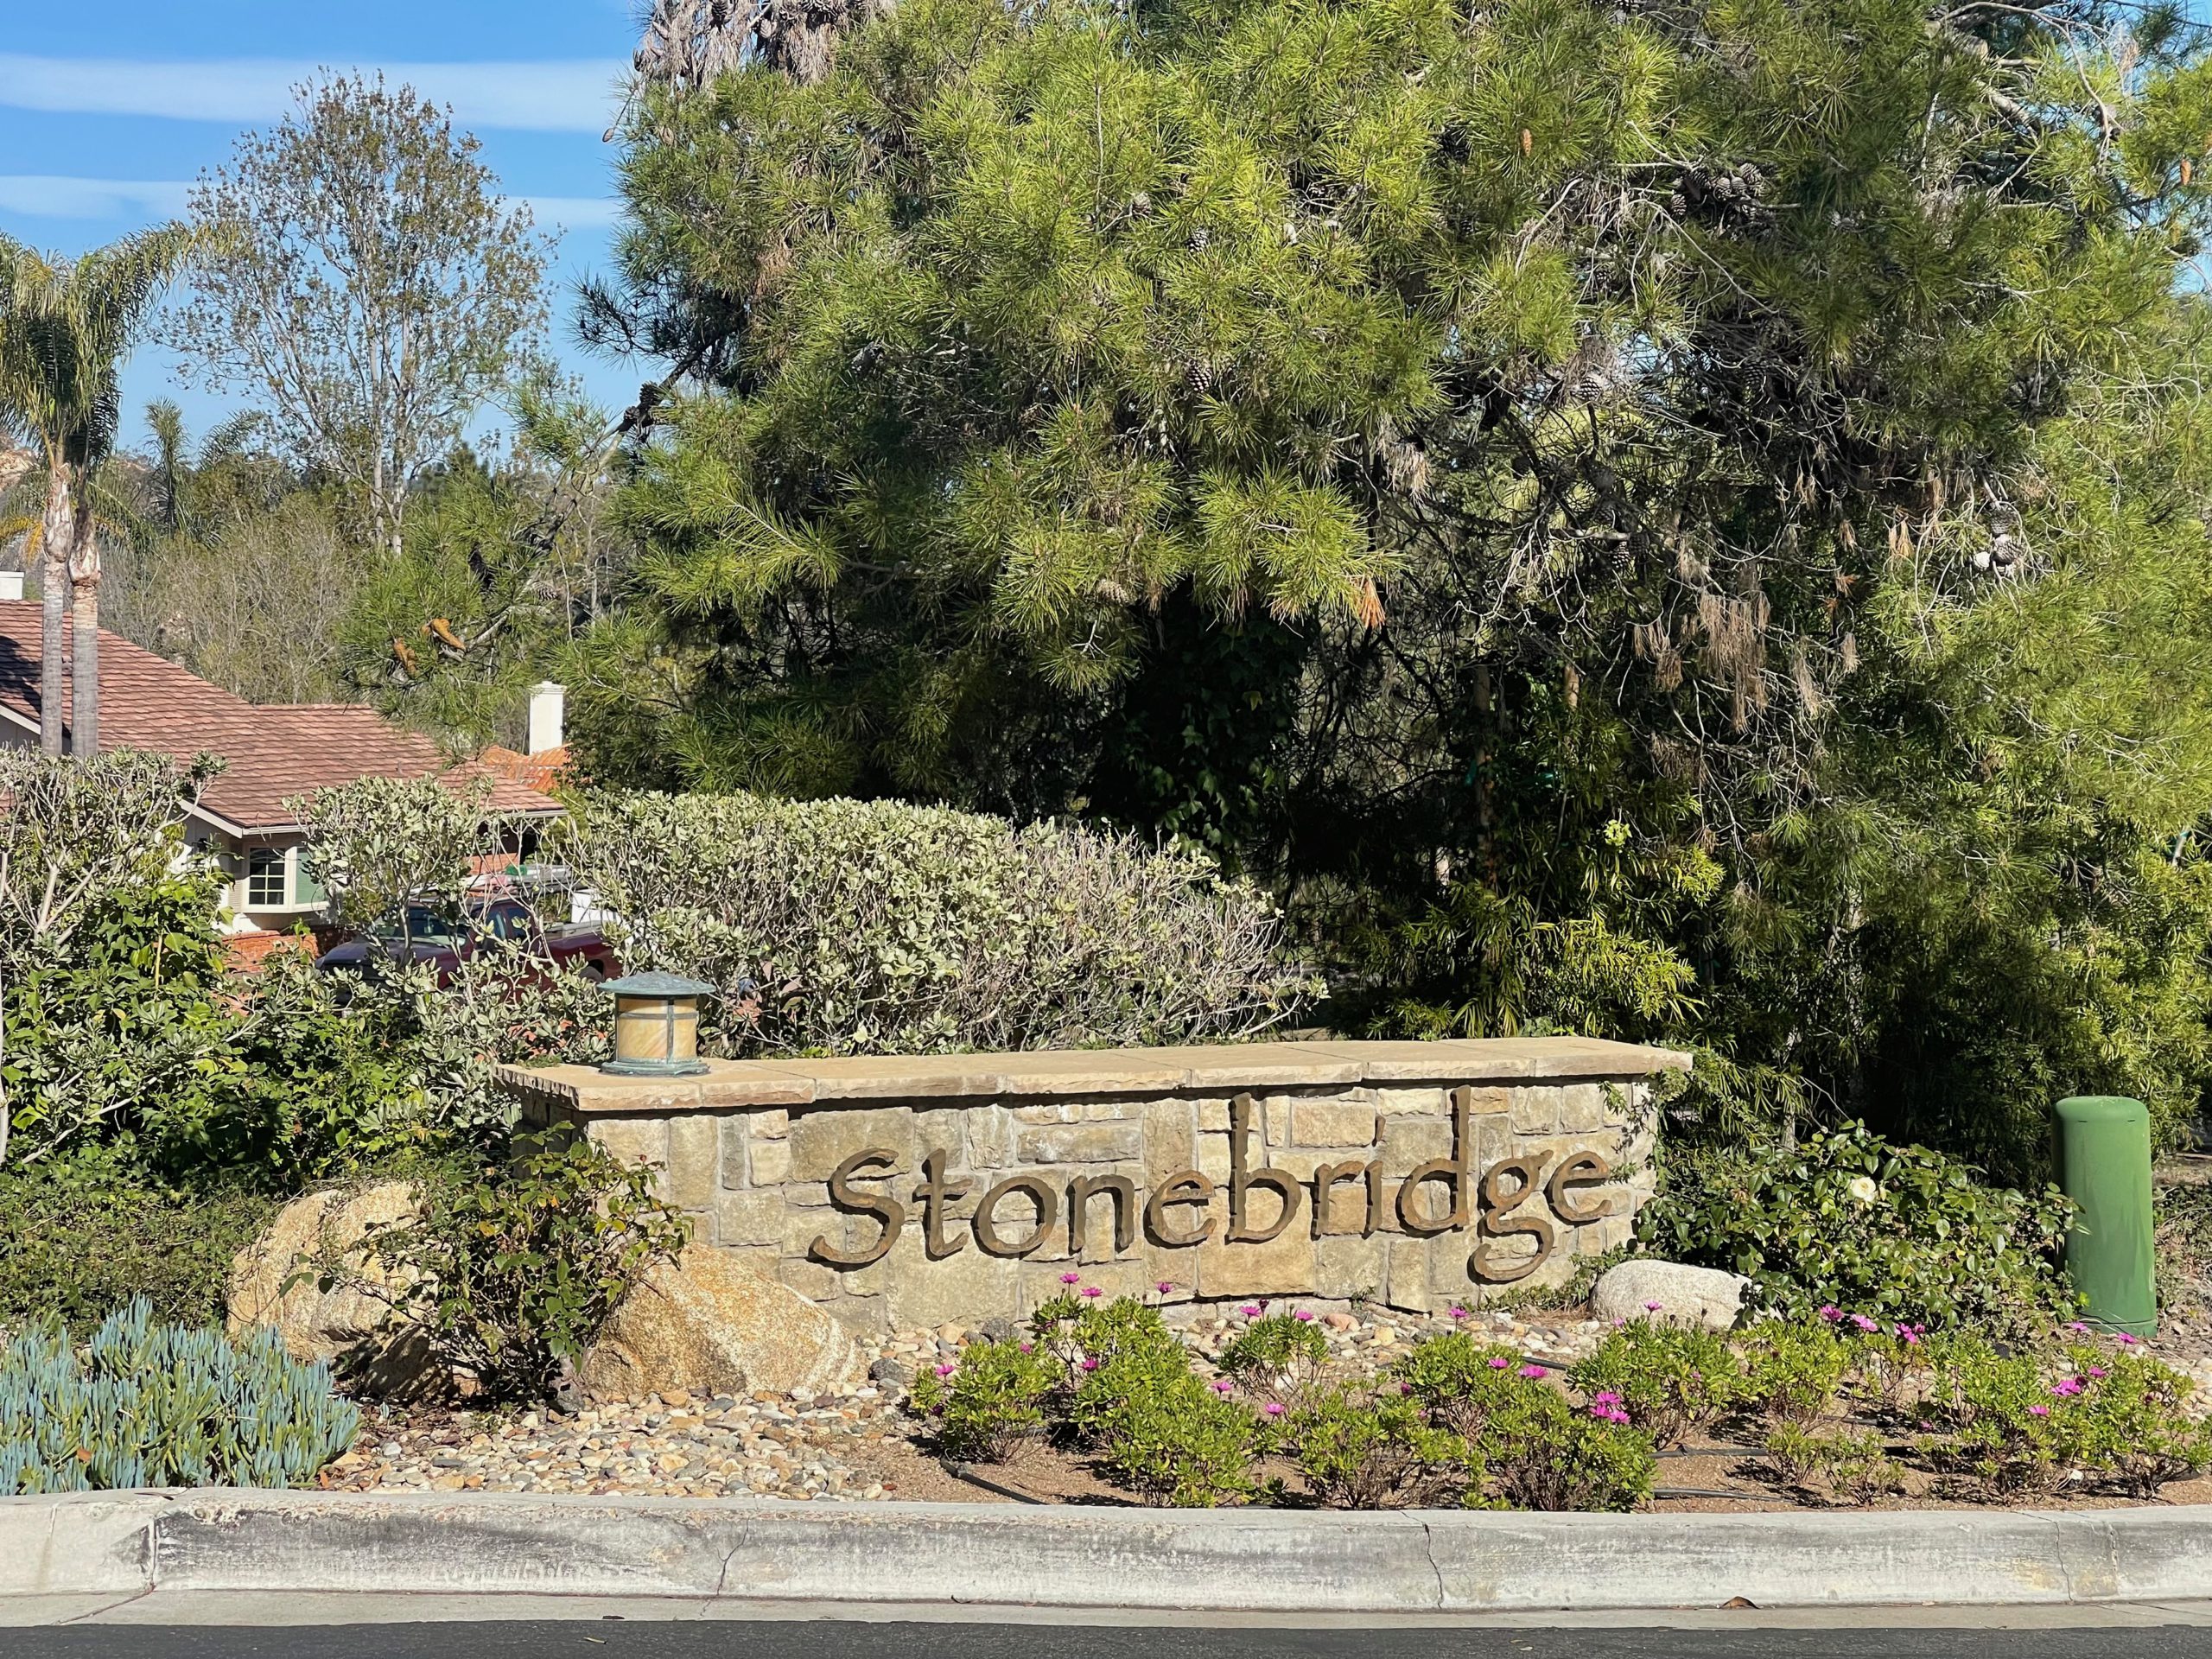 Stonebridge, Rancho Santa Fe, 92067